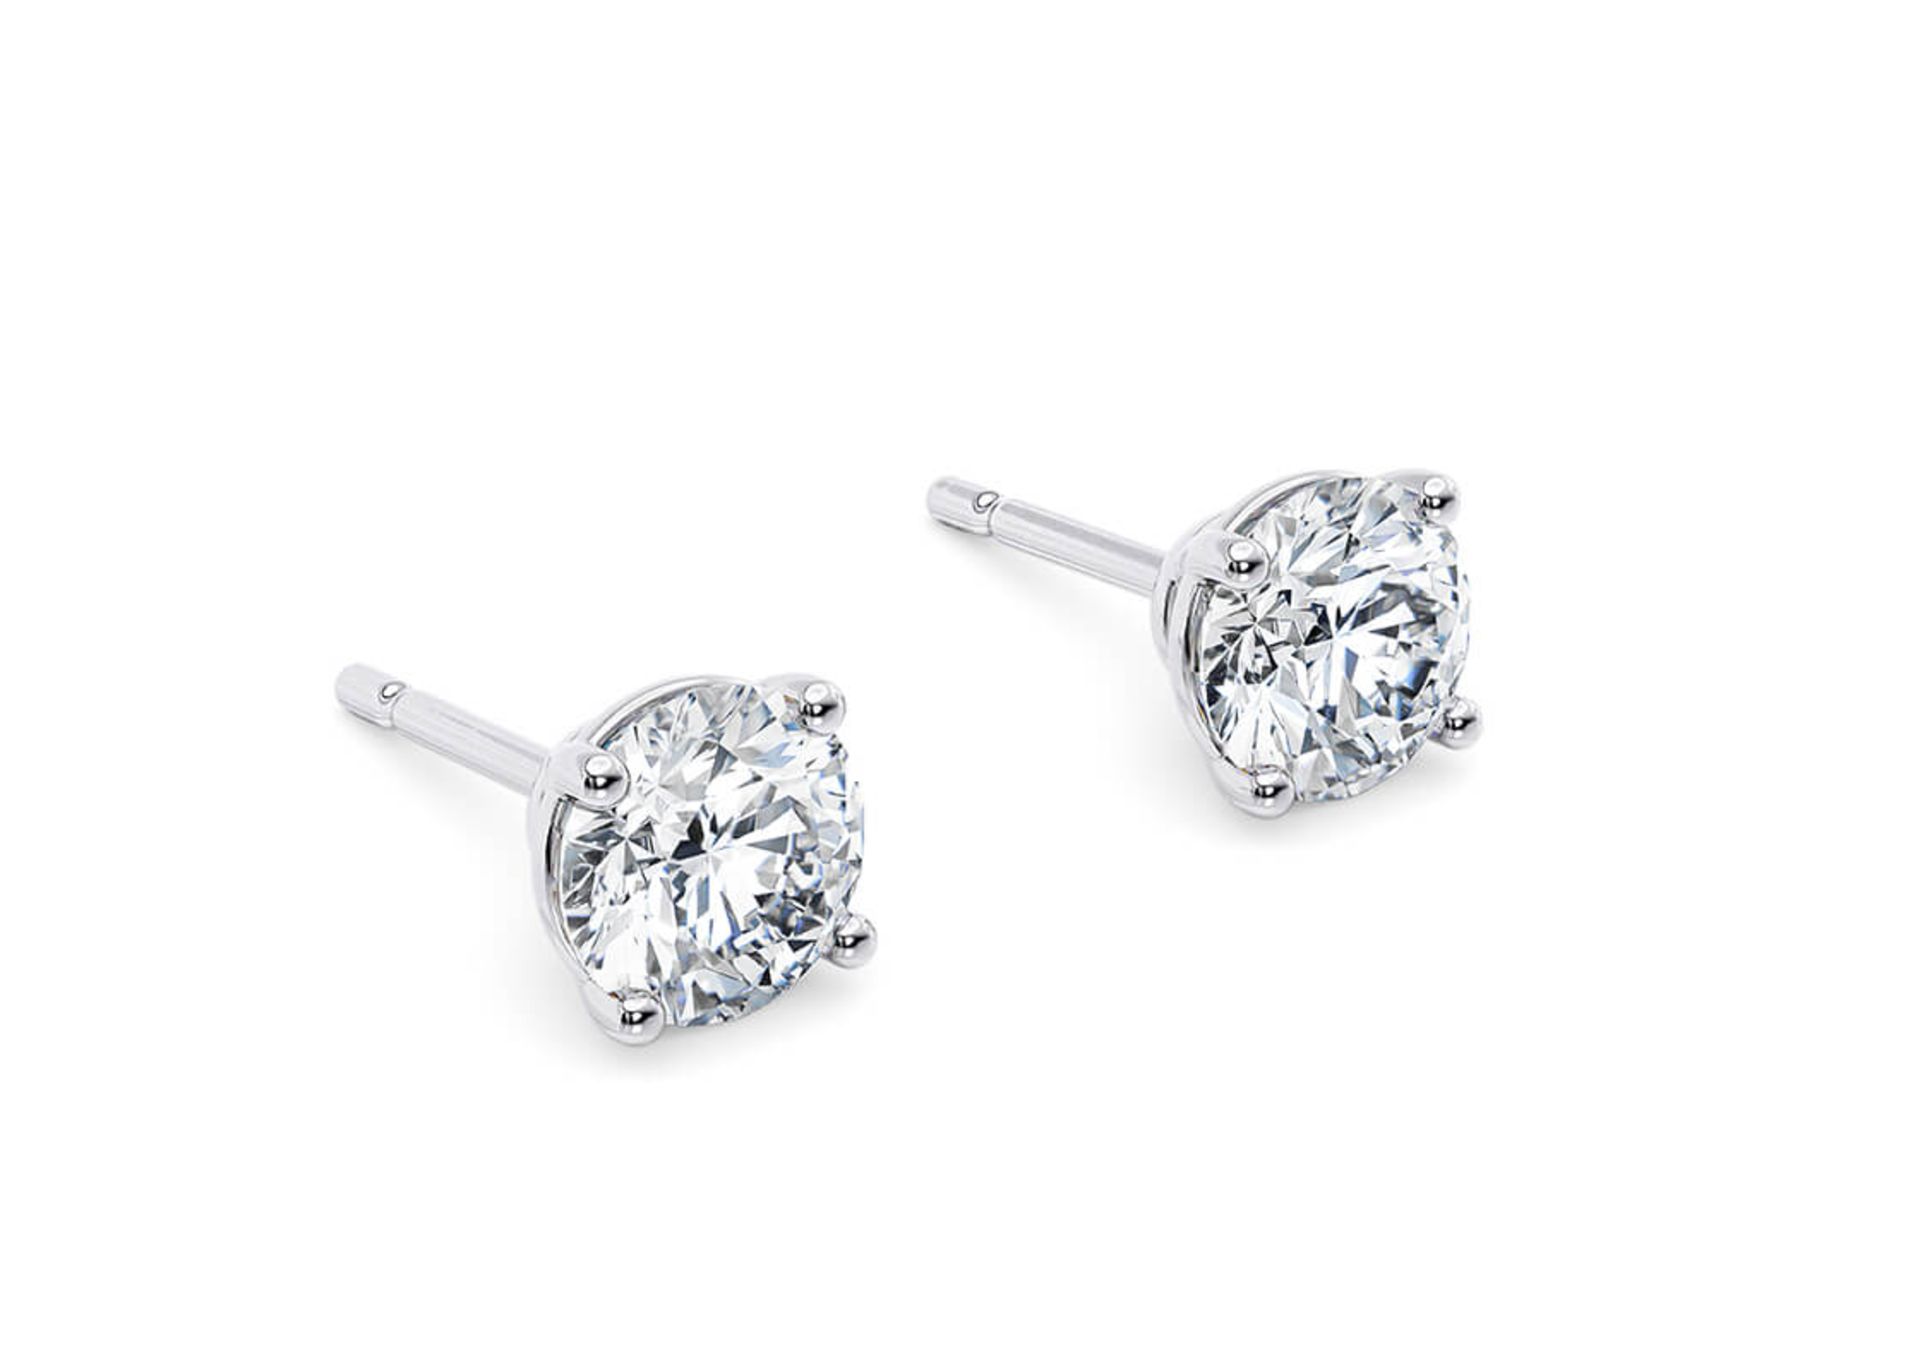 Round Brilliant Cut 2.00 Carat Diamond Earrings Set in 18kt White Gold - E Colour VS - IGI - Image 2 of 3